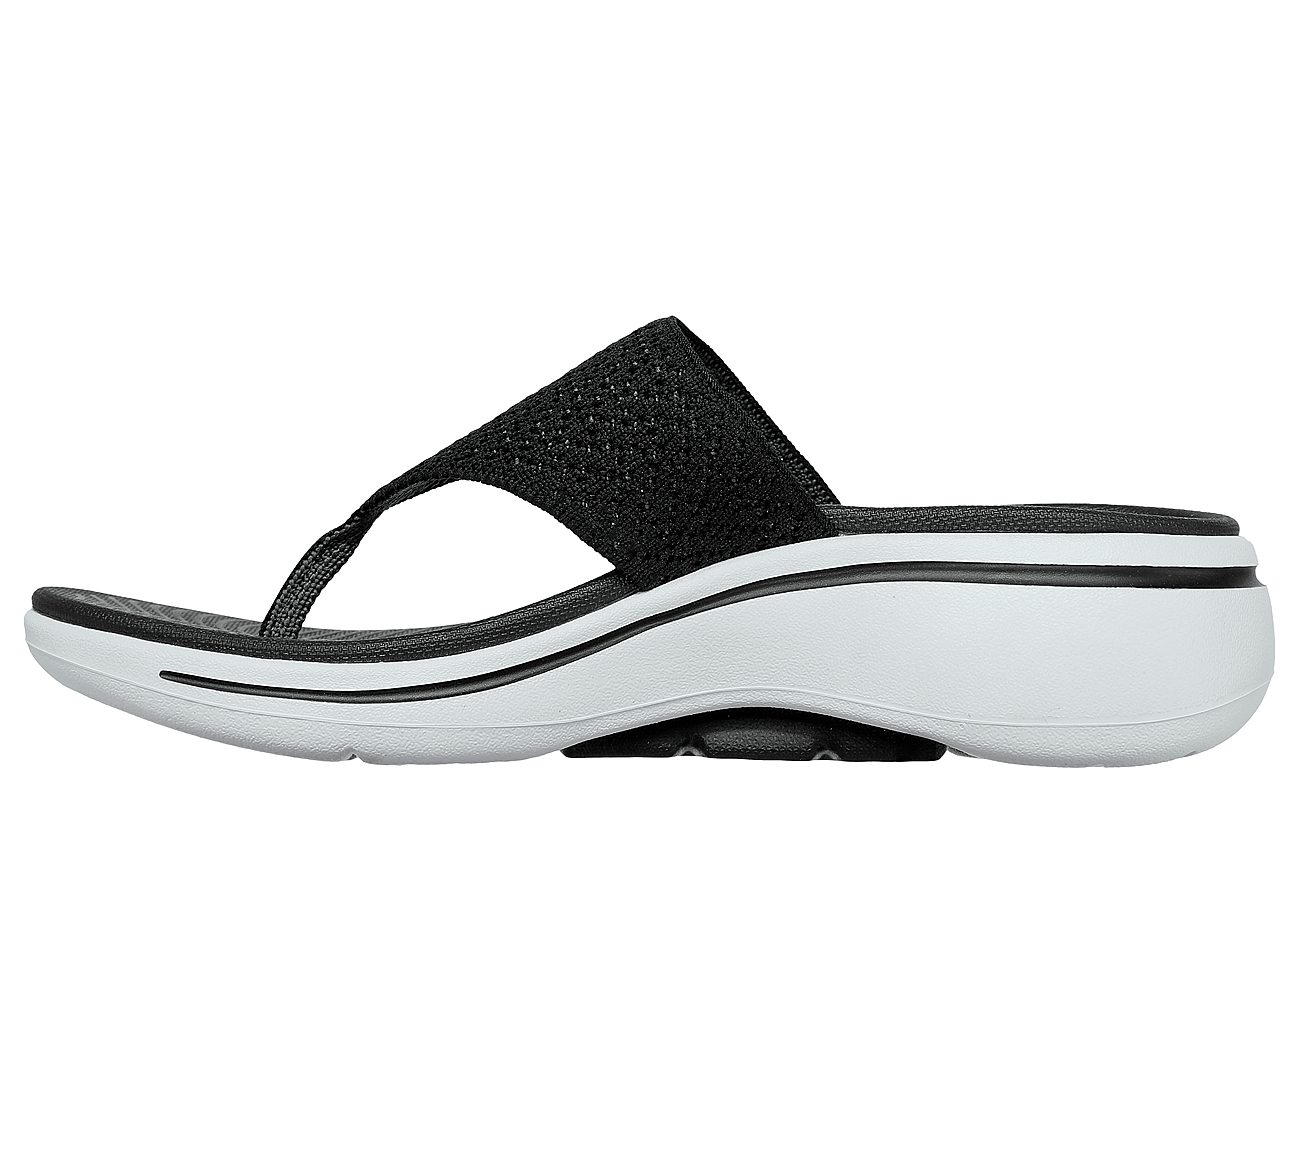 GO WALK ARCH FIT SANDAL - WEE, BLACK/WHITE Footwear Left View